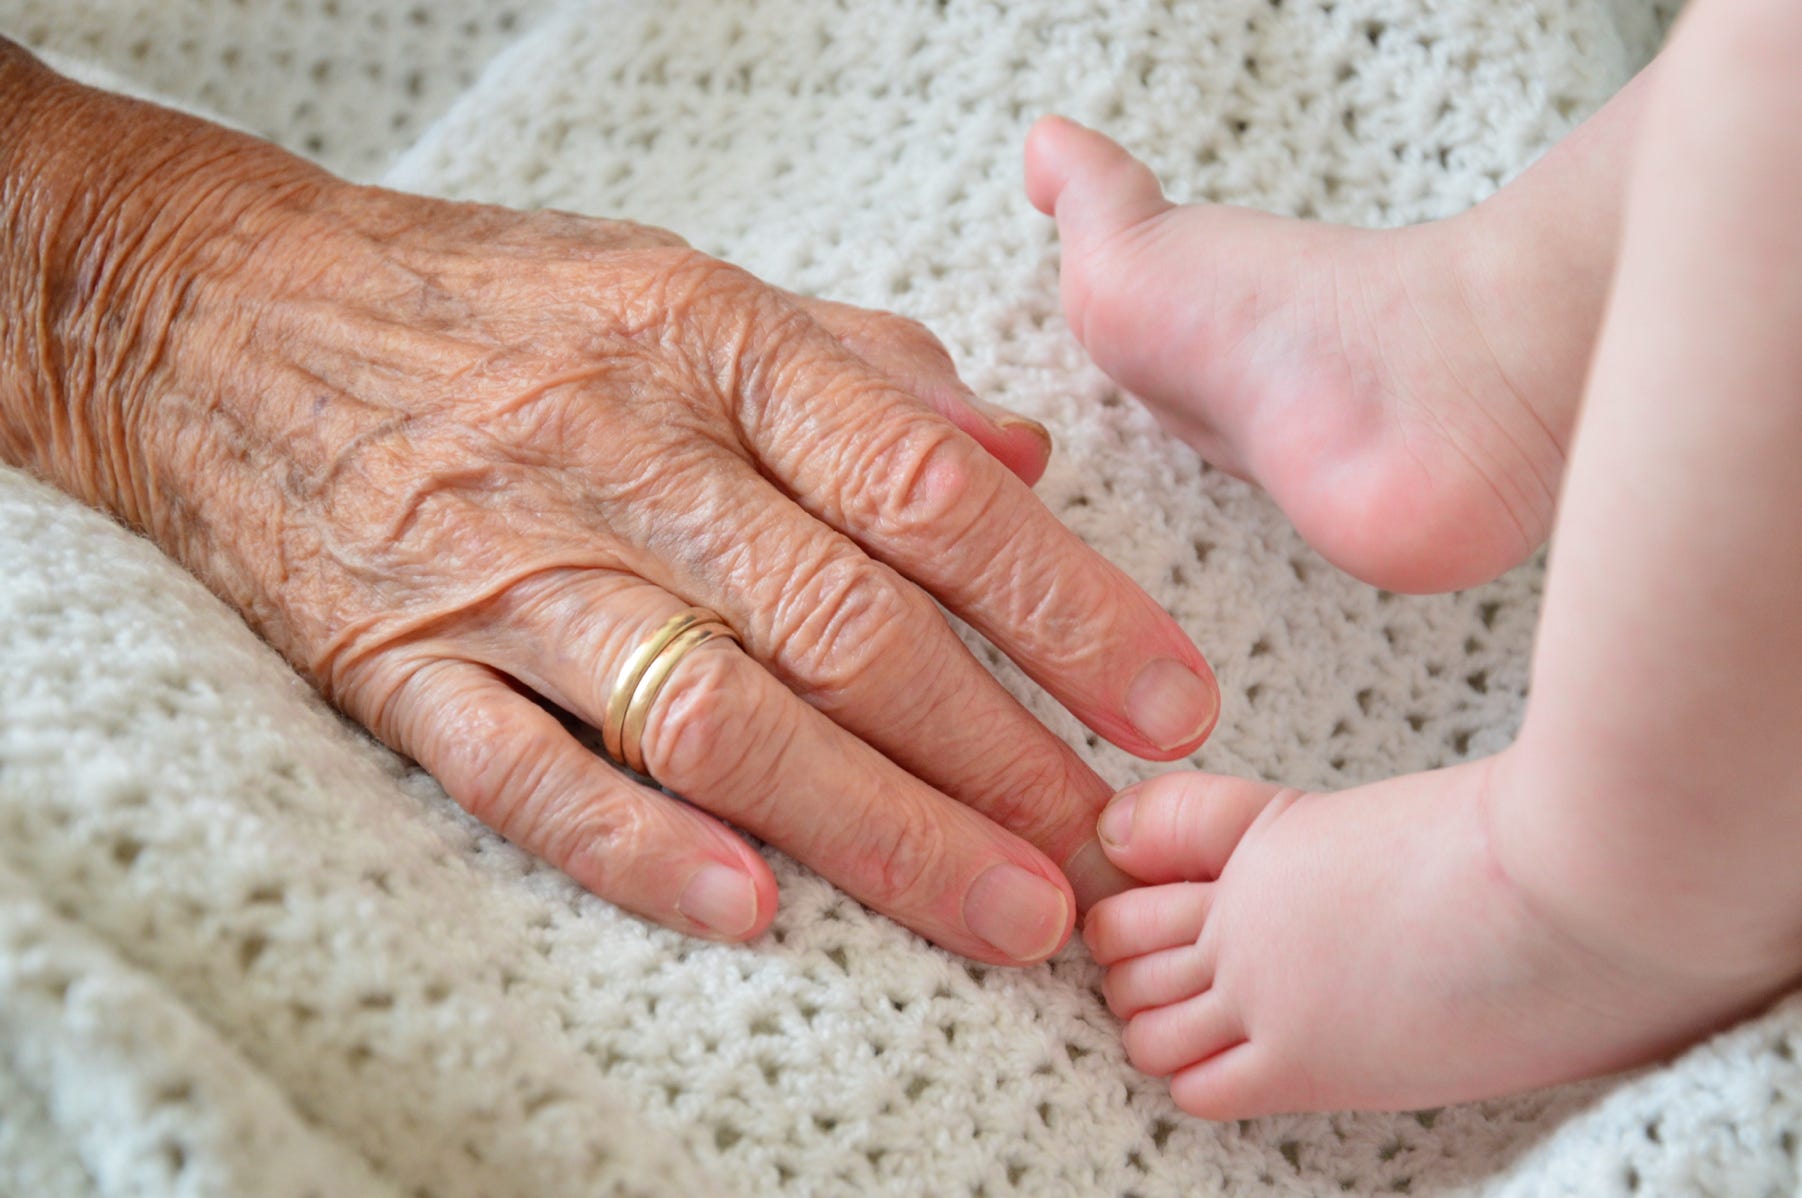 Elderly hand with baby's feet